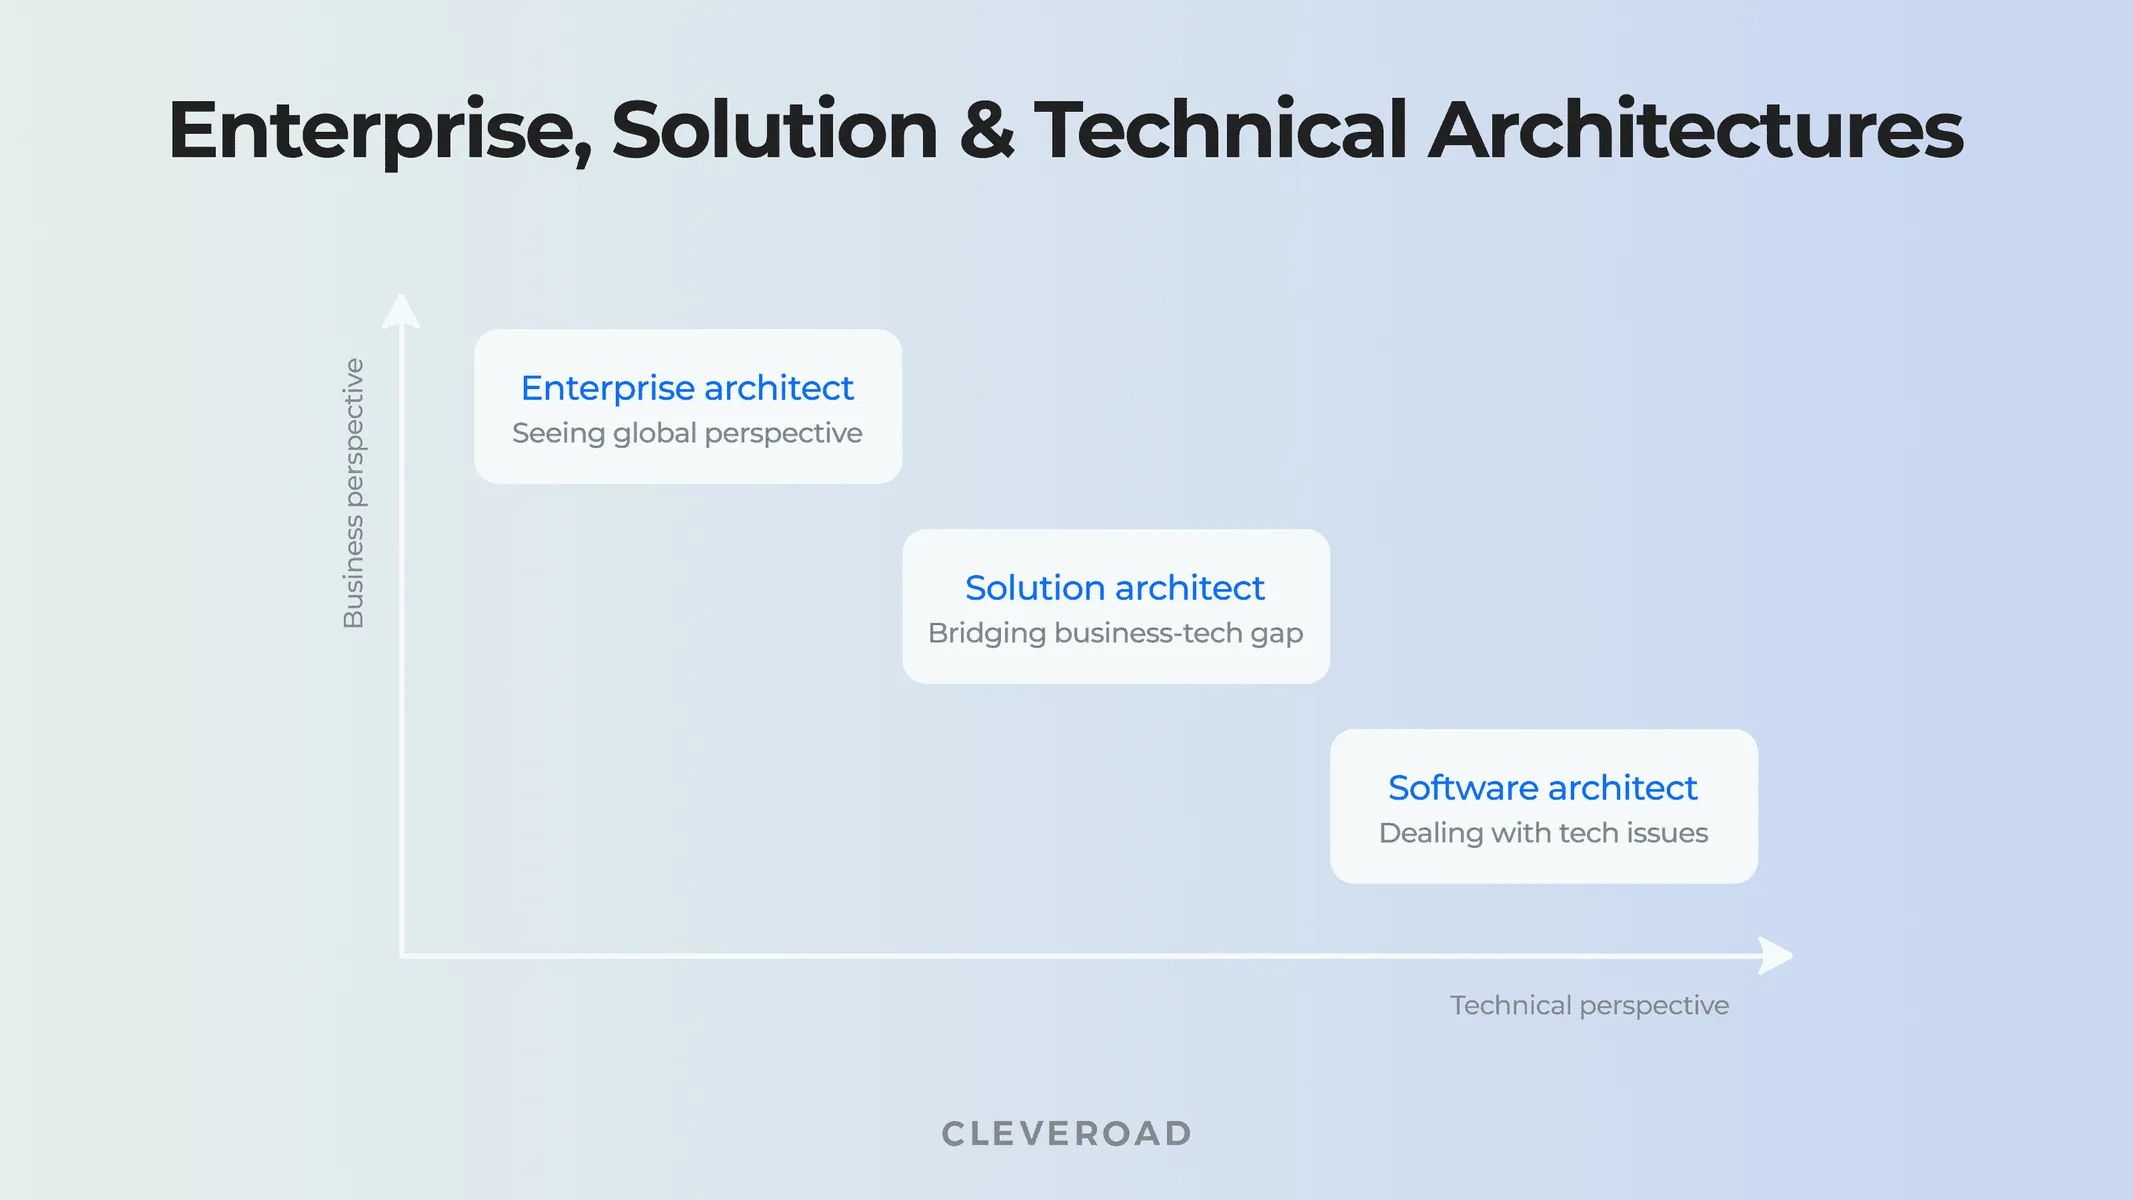 Enterprise vs solutions vs software architects